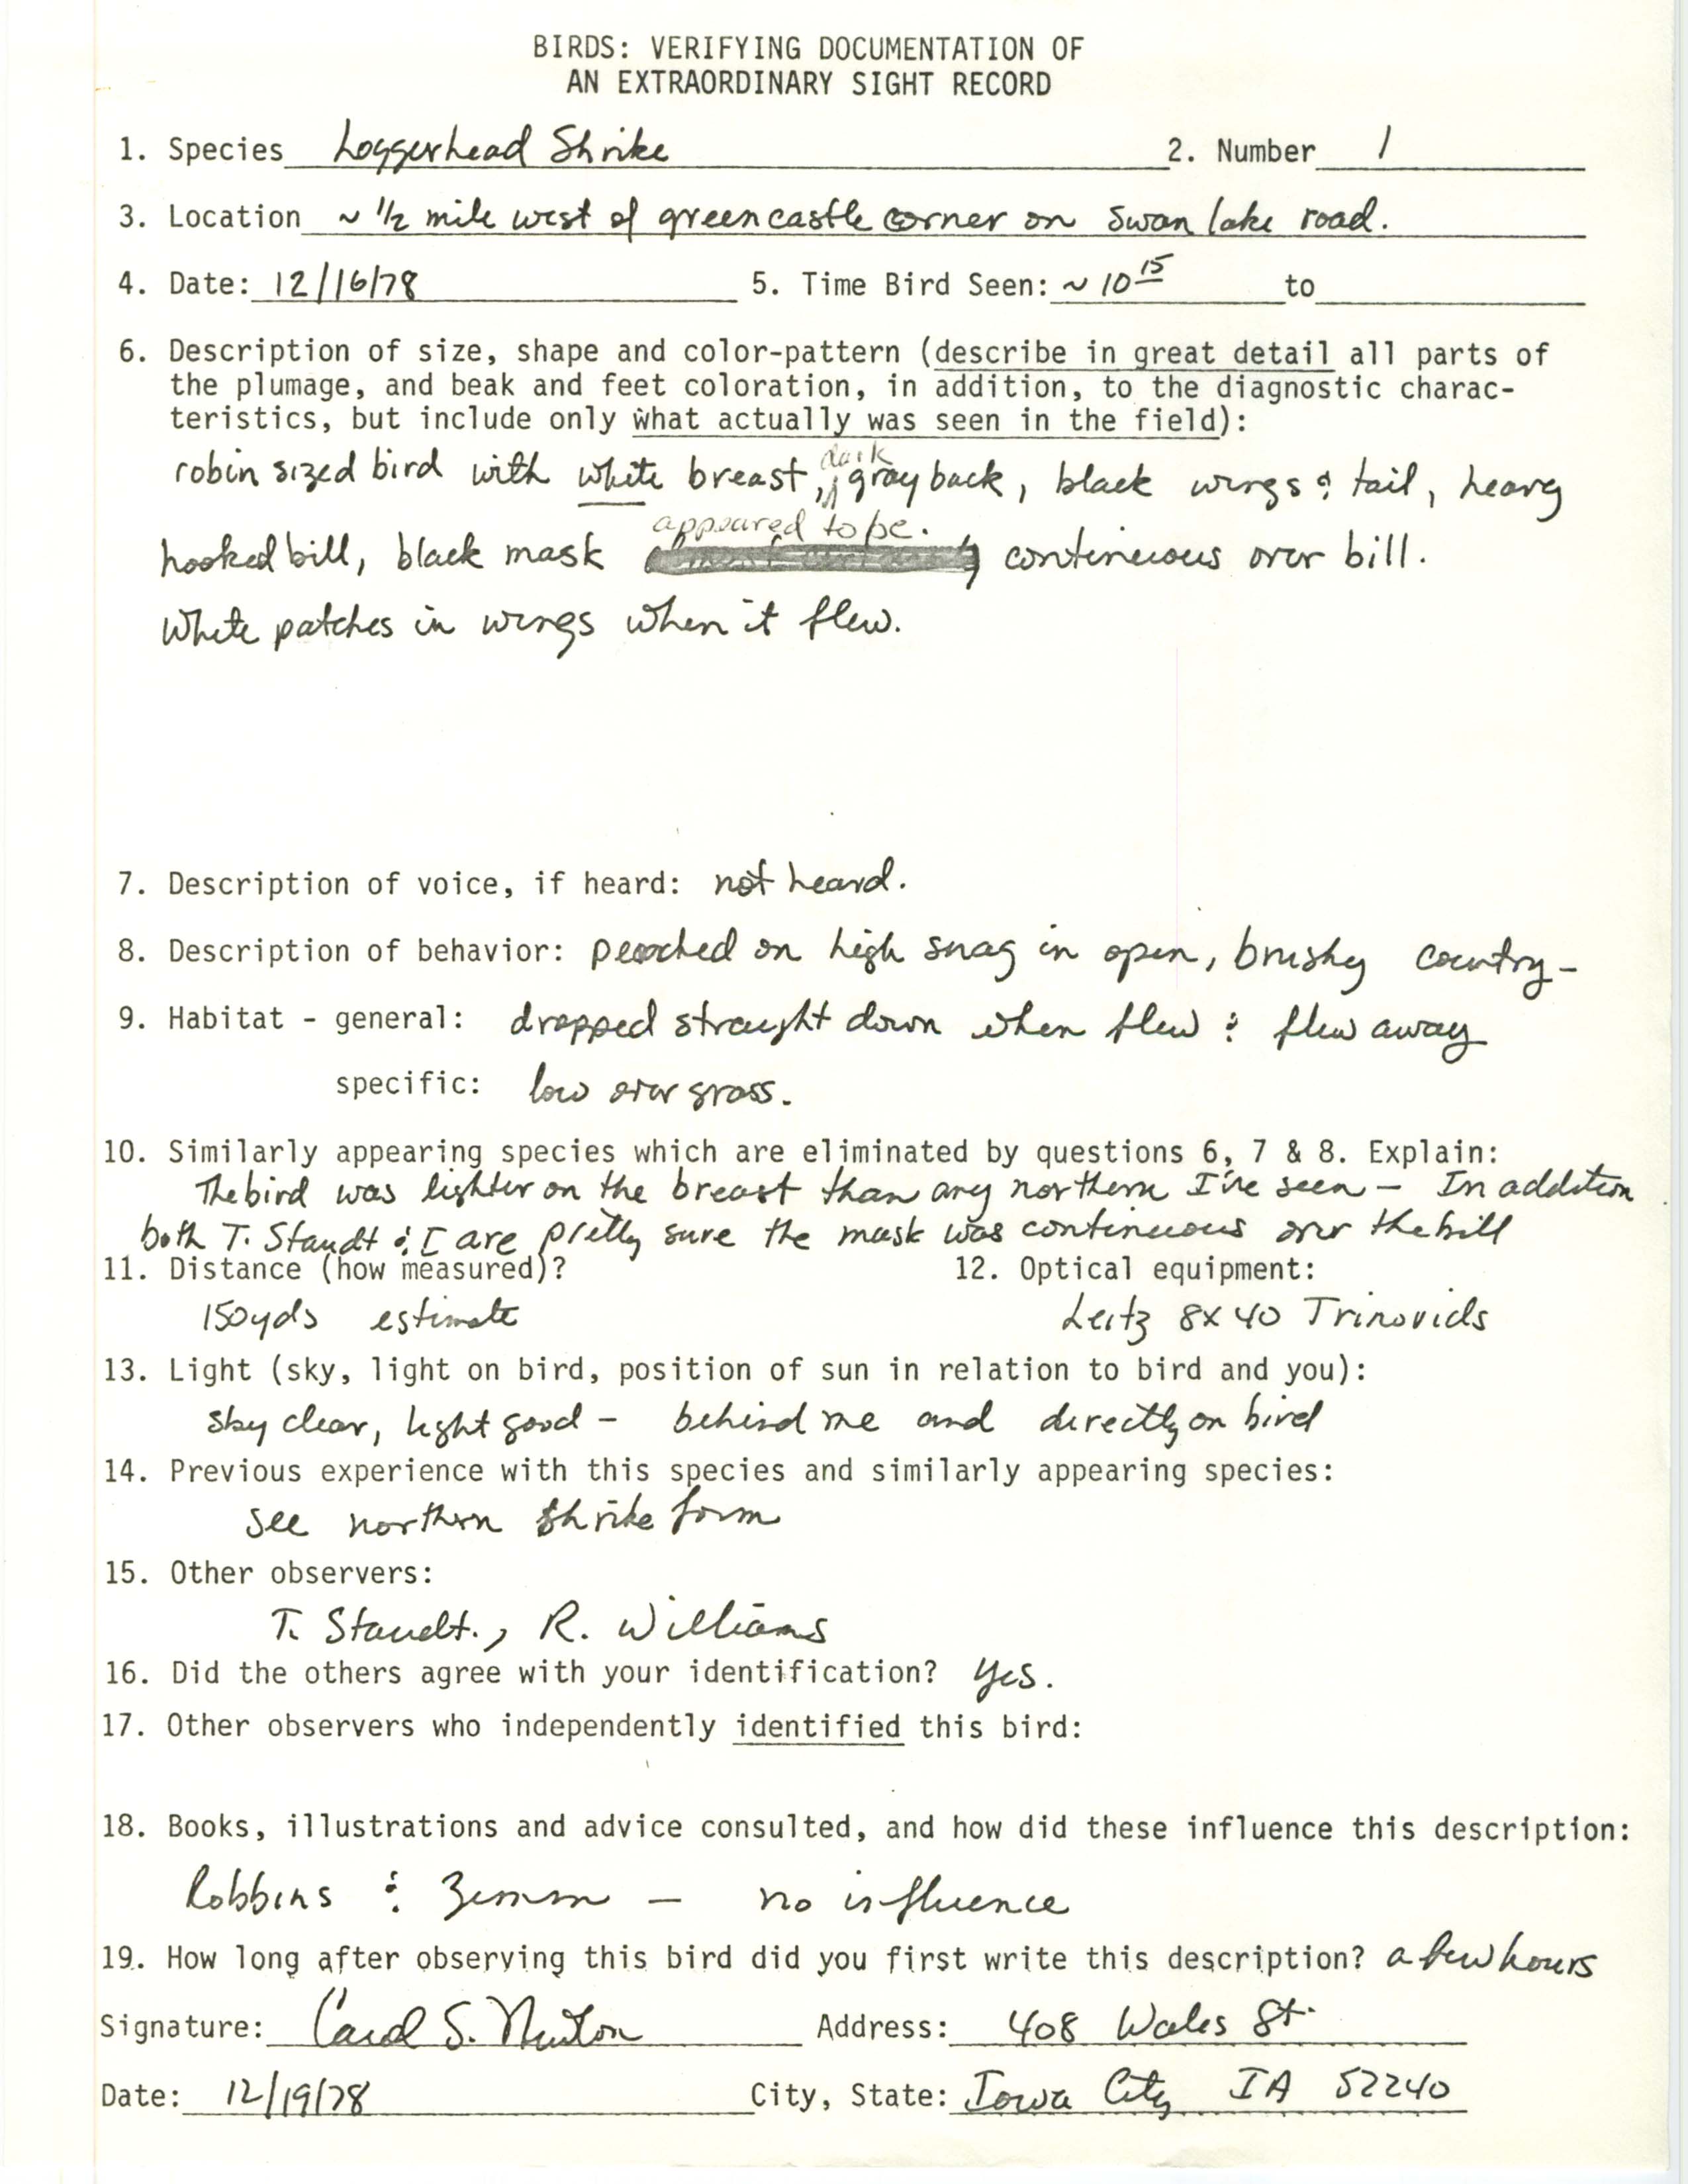 Rare bird documentation form for Loggerhead Shrike west of Green Castle, 1978